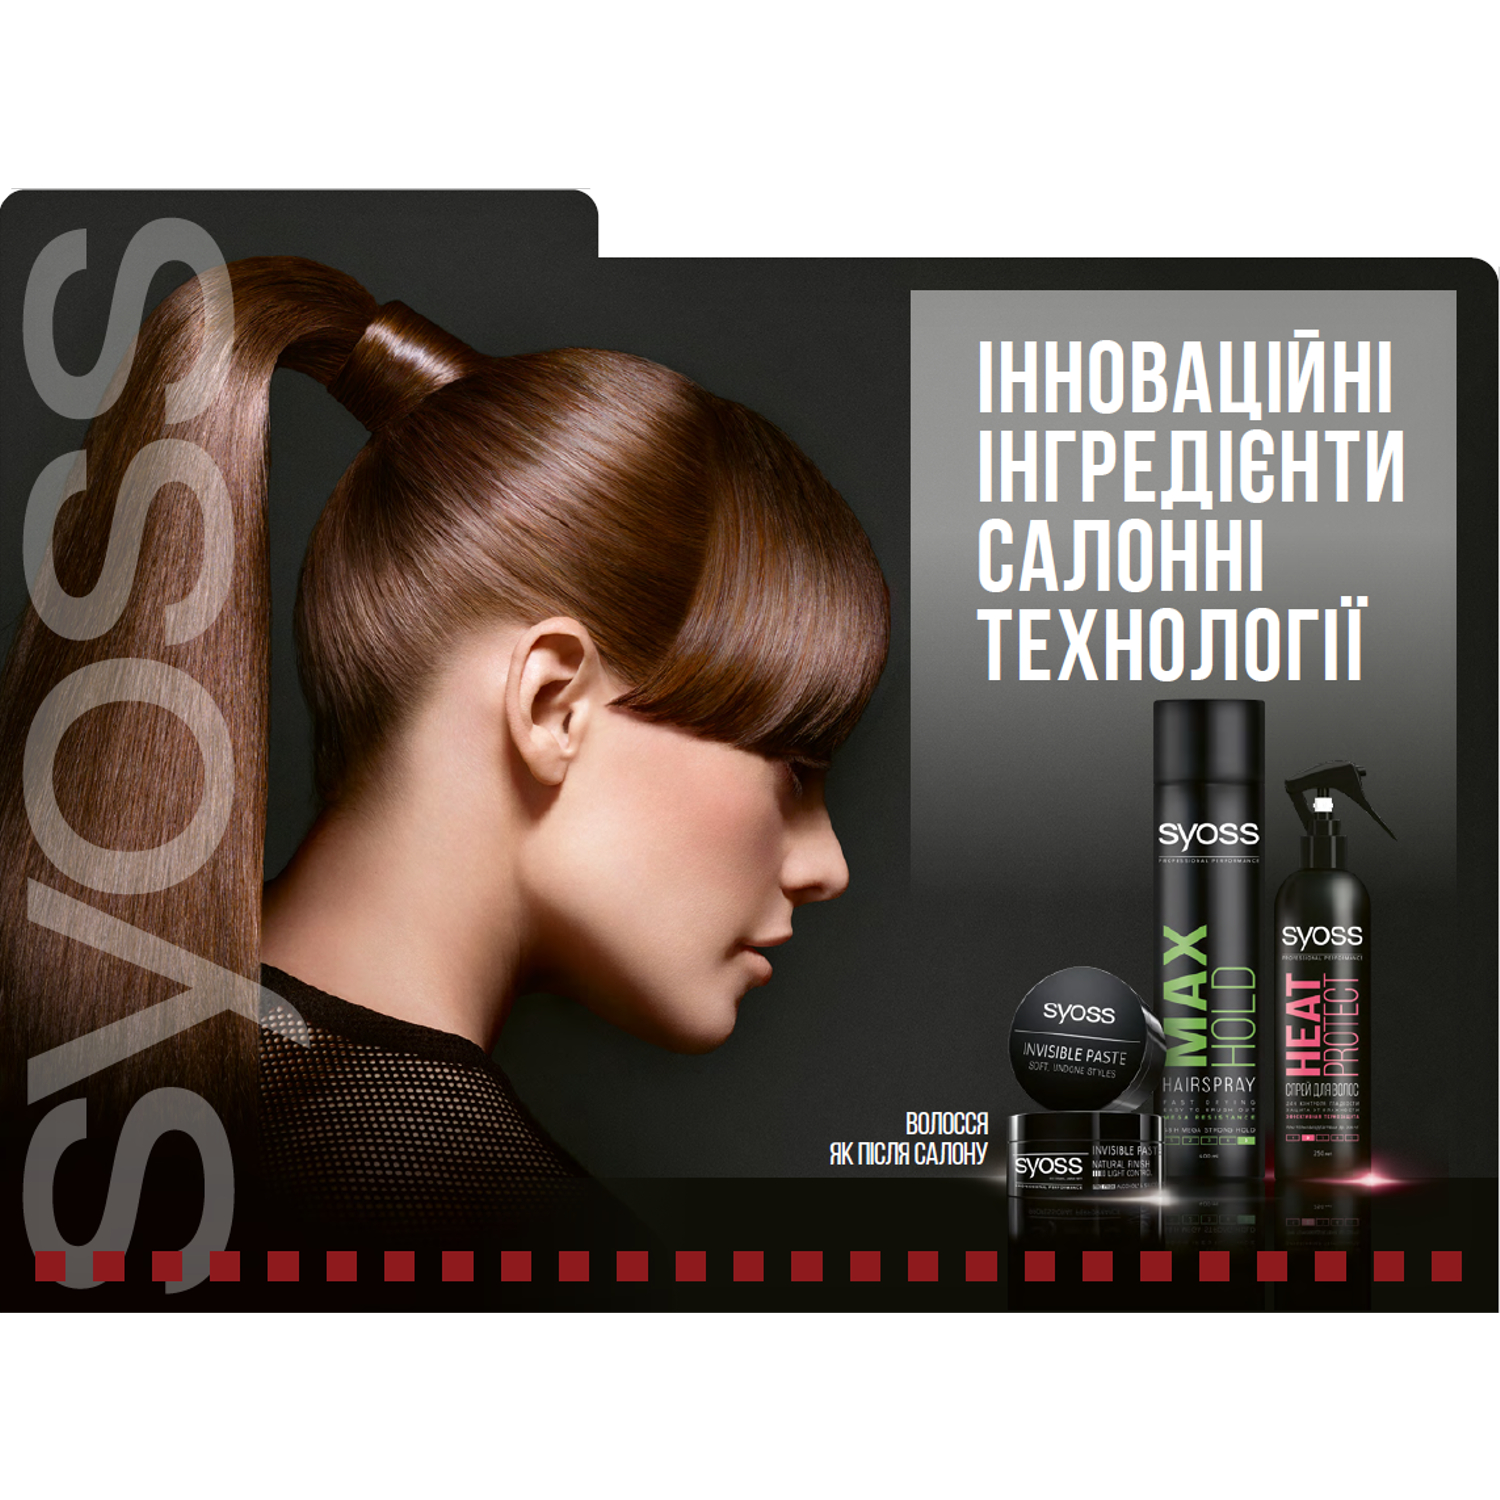 Мусс для укладки волос Syoss Volume Lift Фиксация 4, 250 мл - фото 2